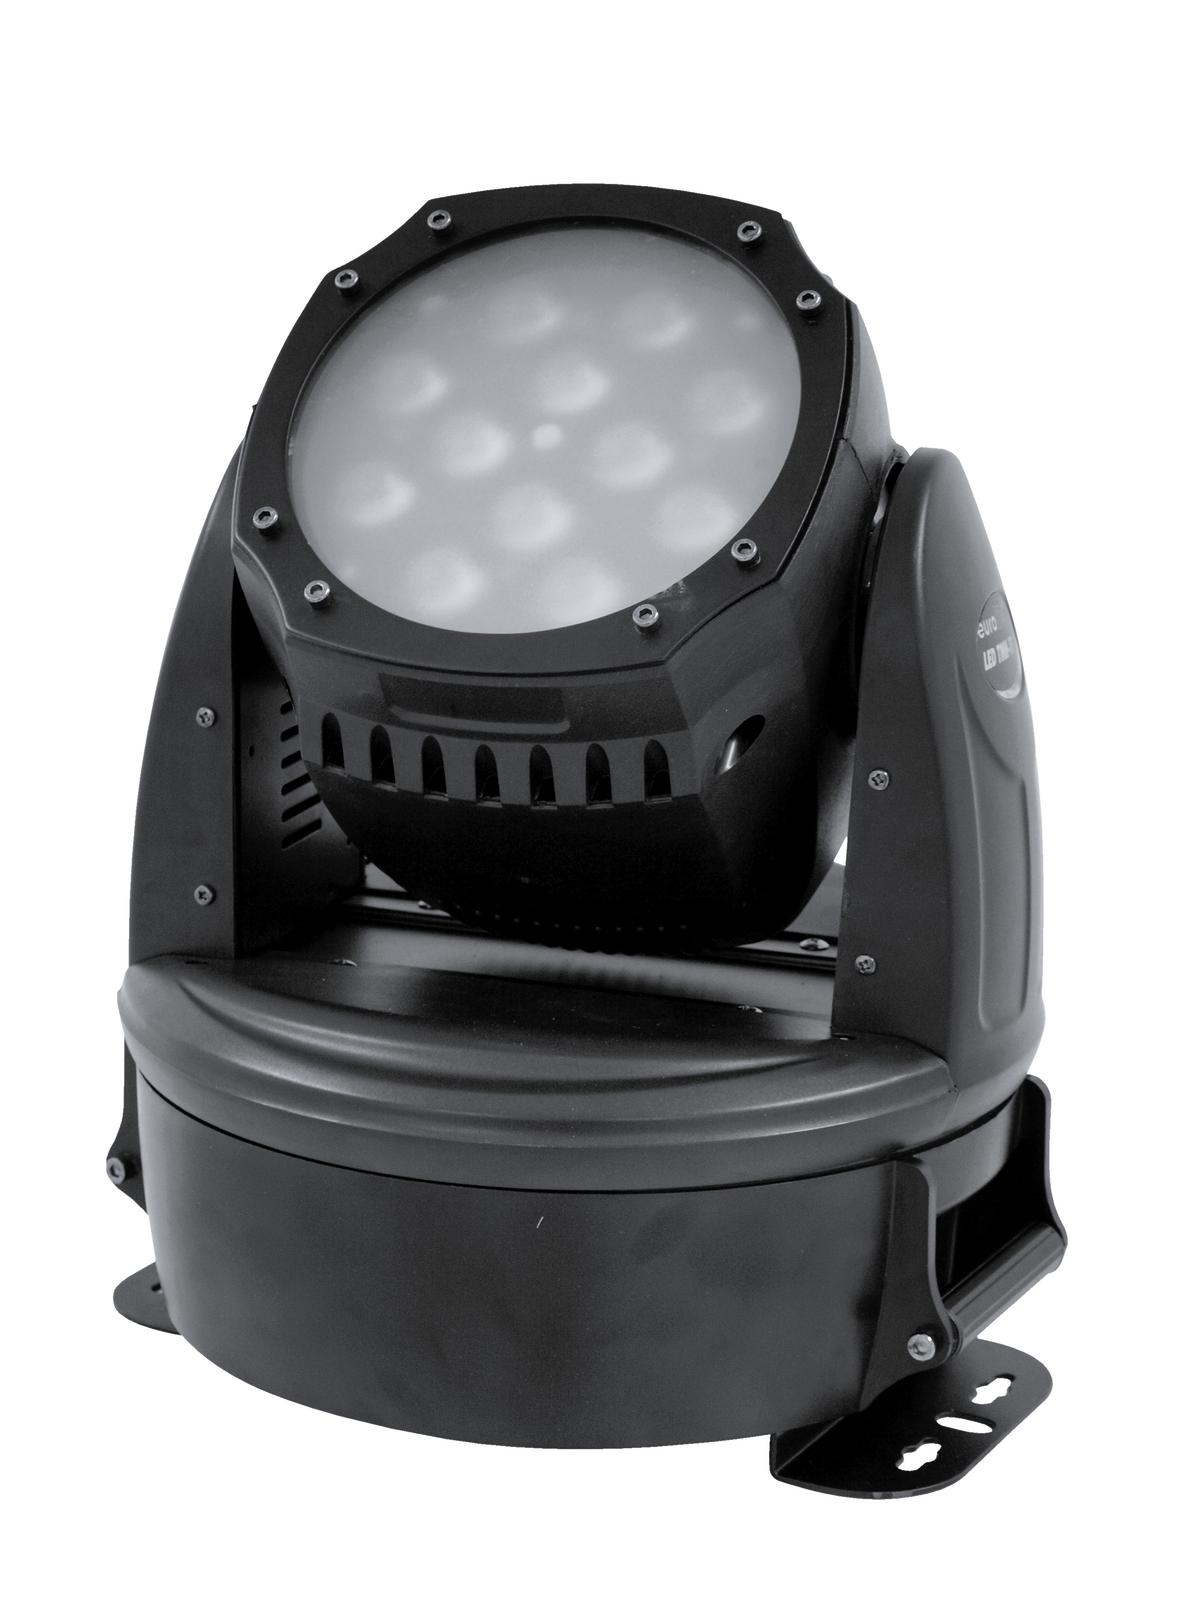 Eurolite LED TMH-11 Moving-Head Wash по цене 0.00 ₽